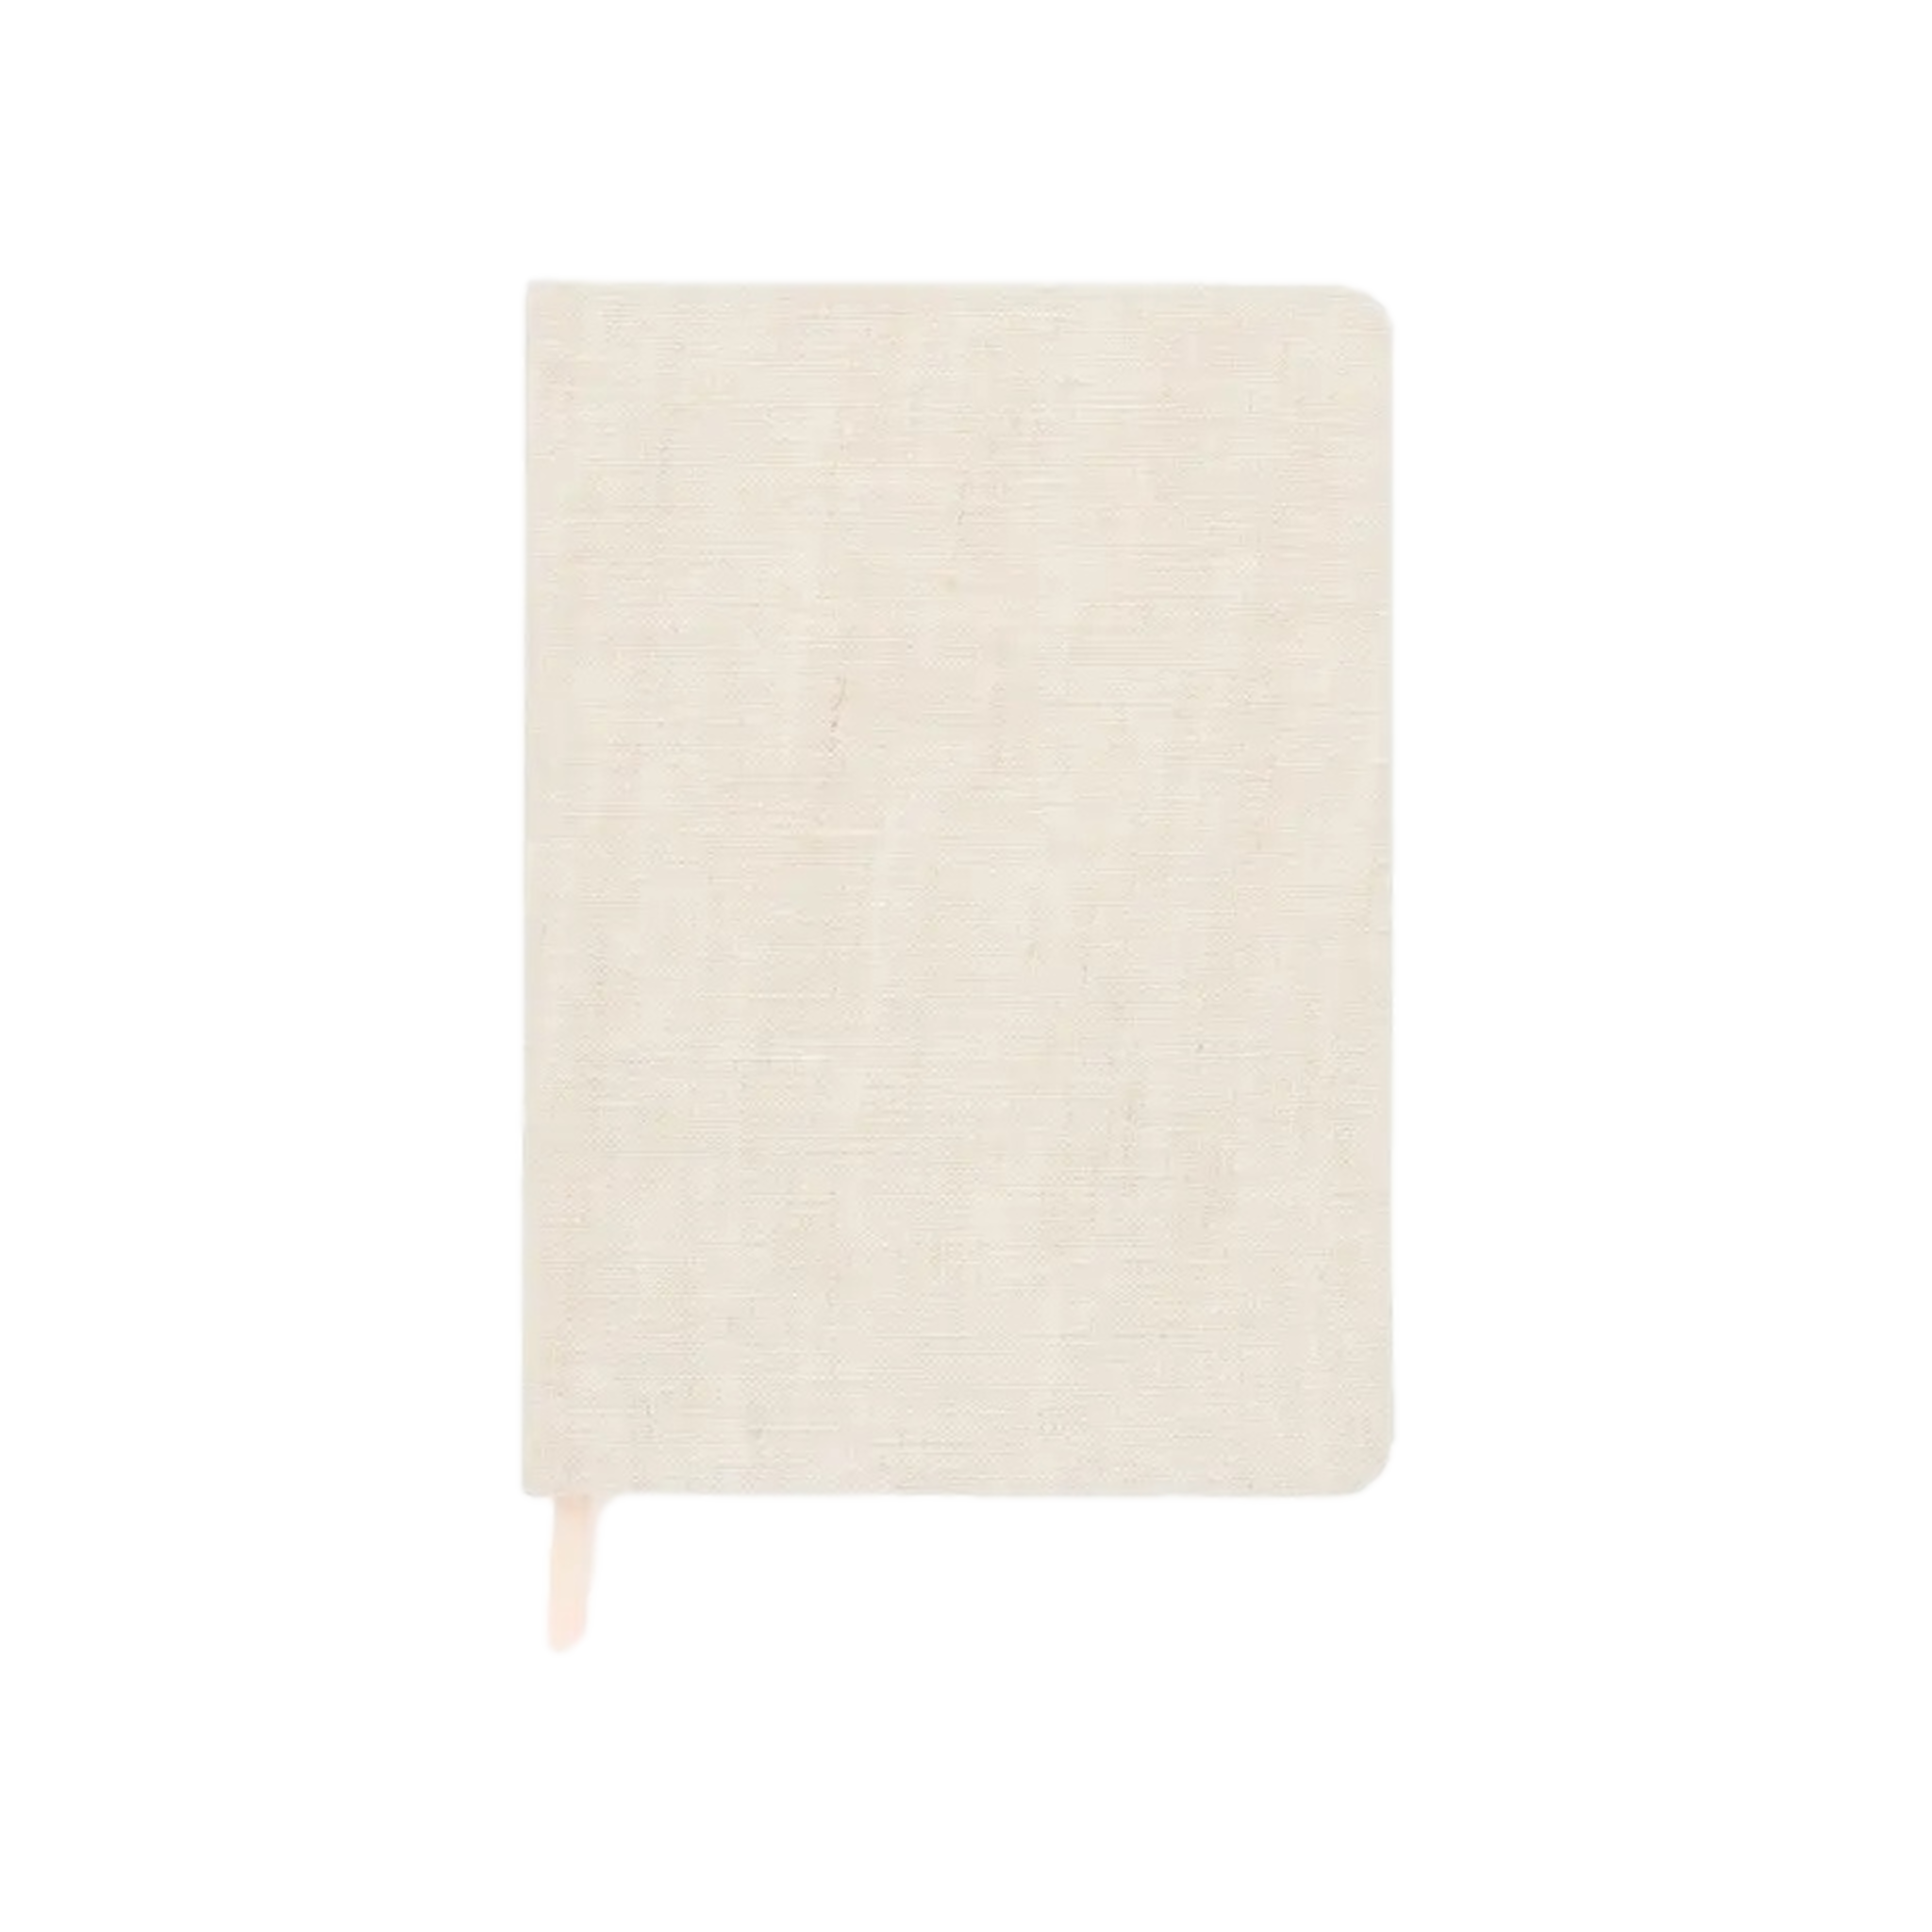 Flax Journal